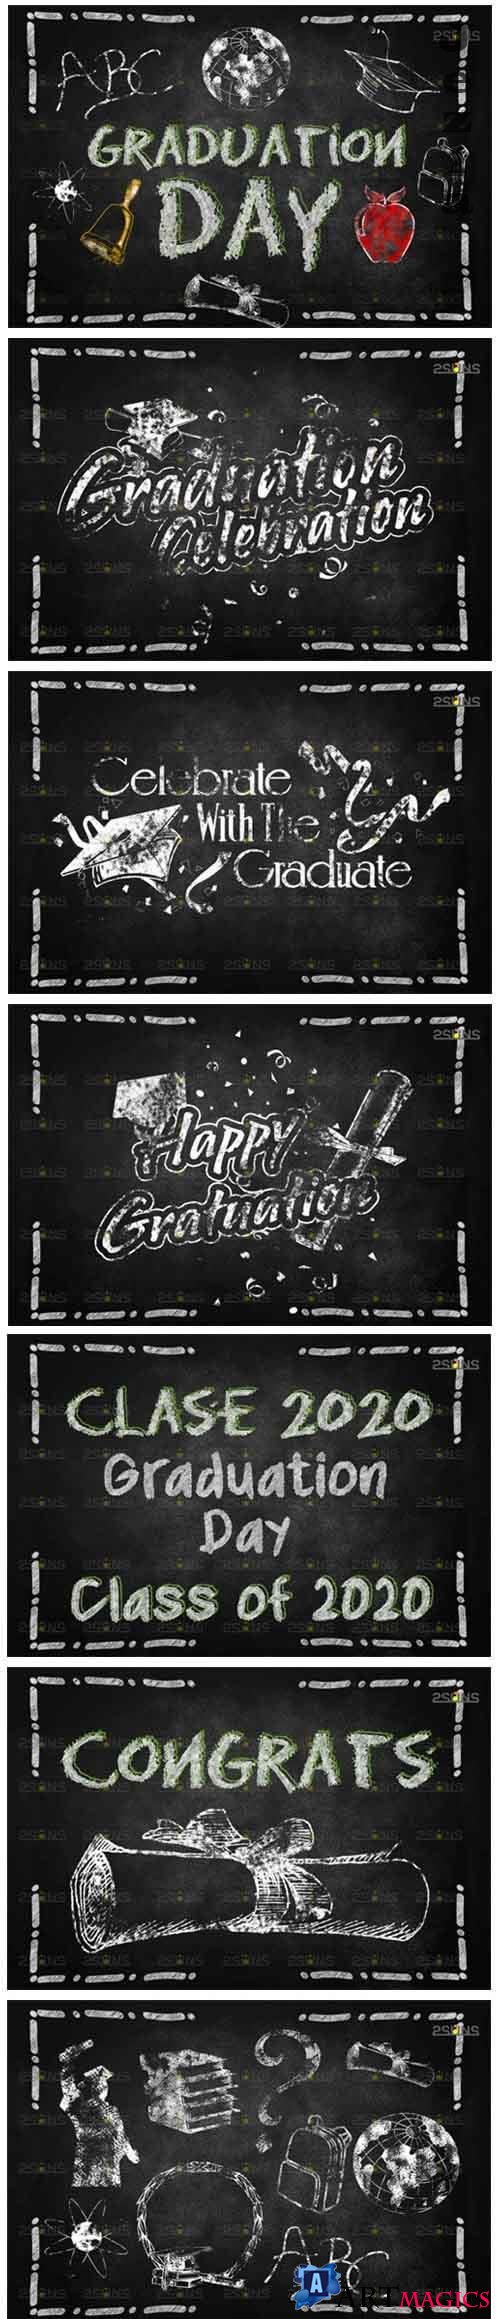 Overlay Graduation Sidewalk Chalk Art - 617282